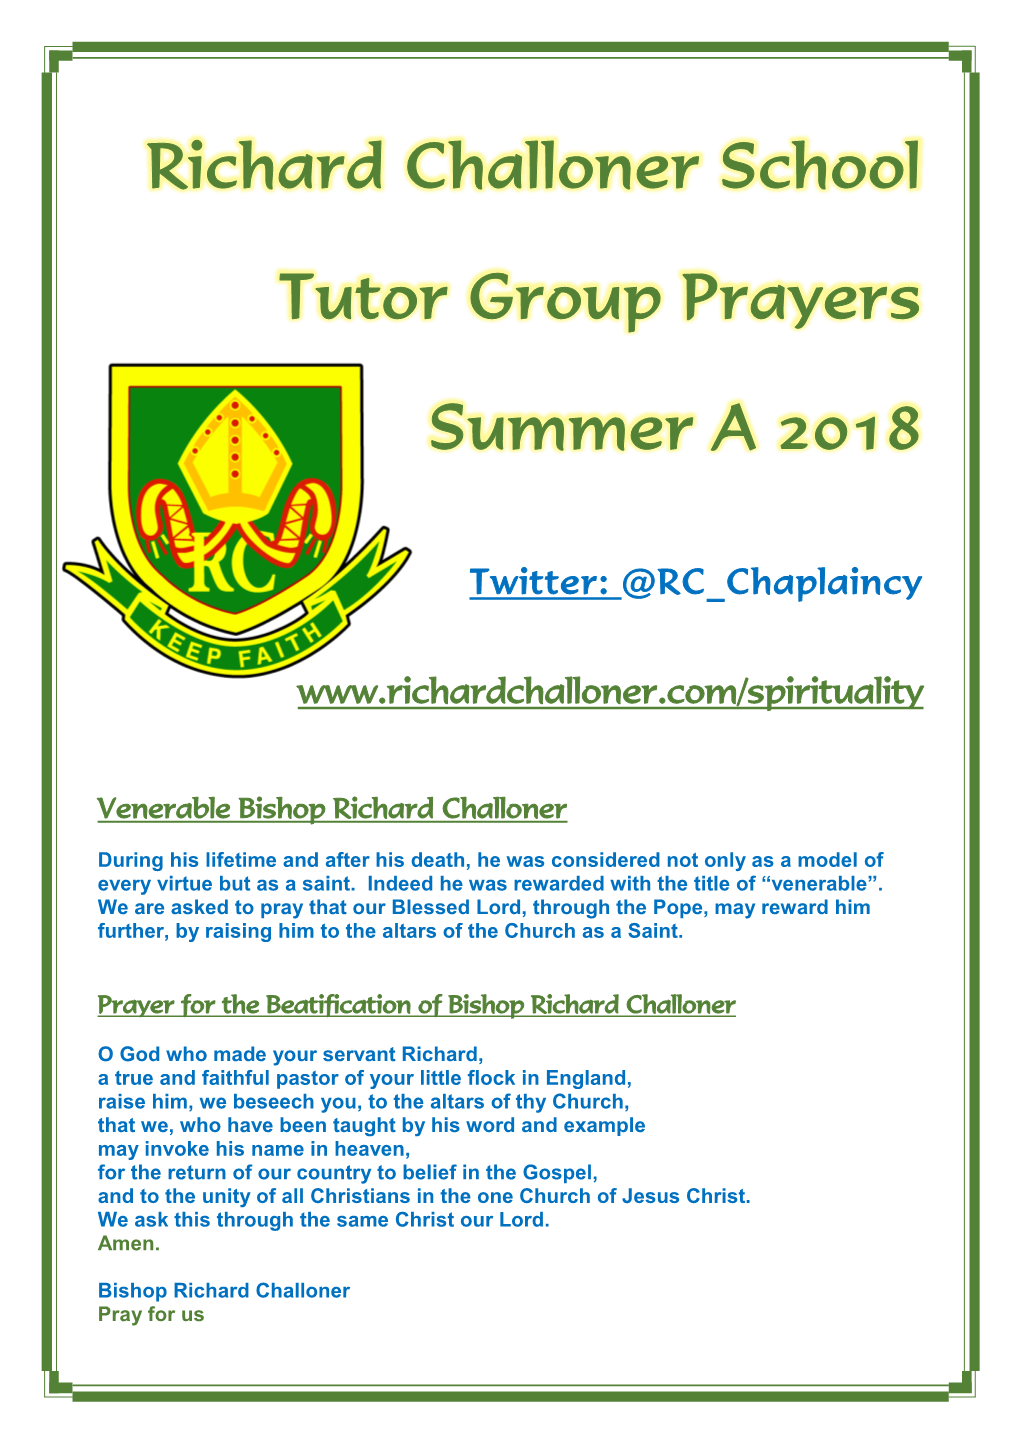 Richard Challoner School Tutor Group Prayers Summer a 2018